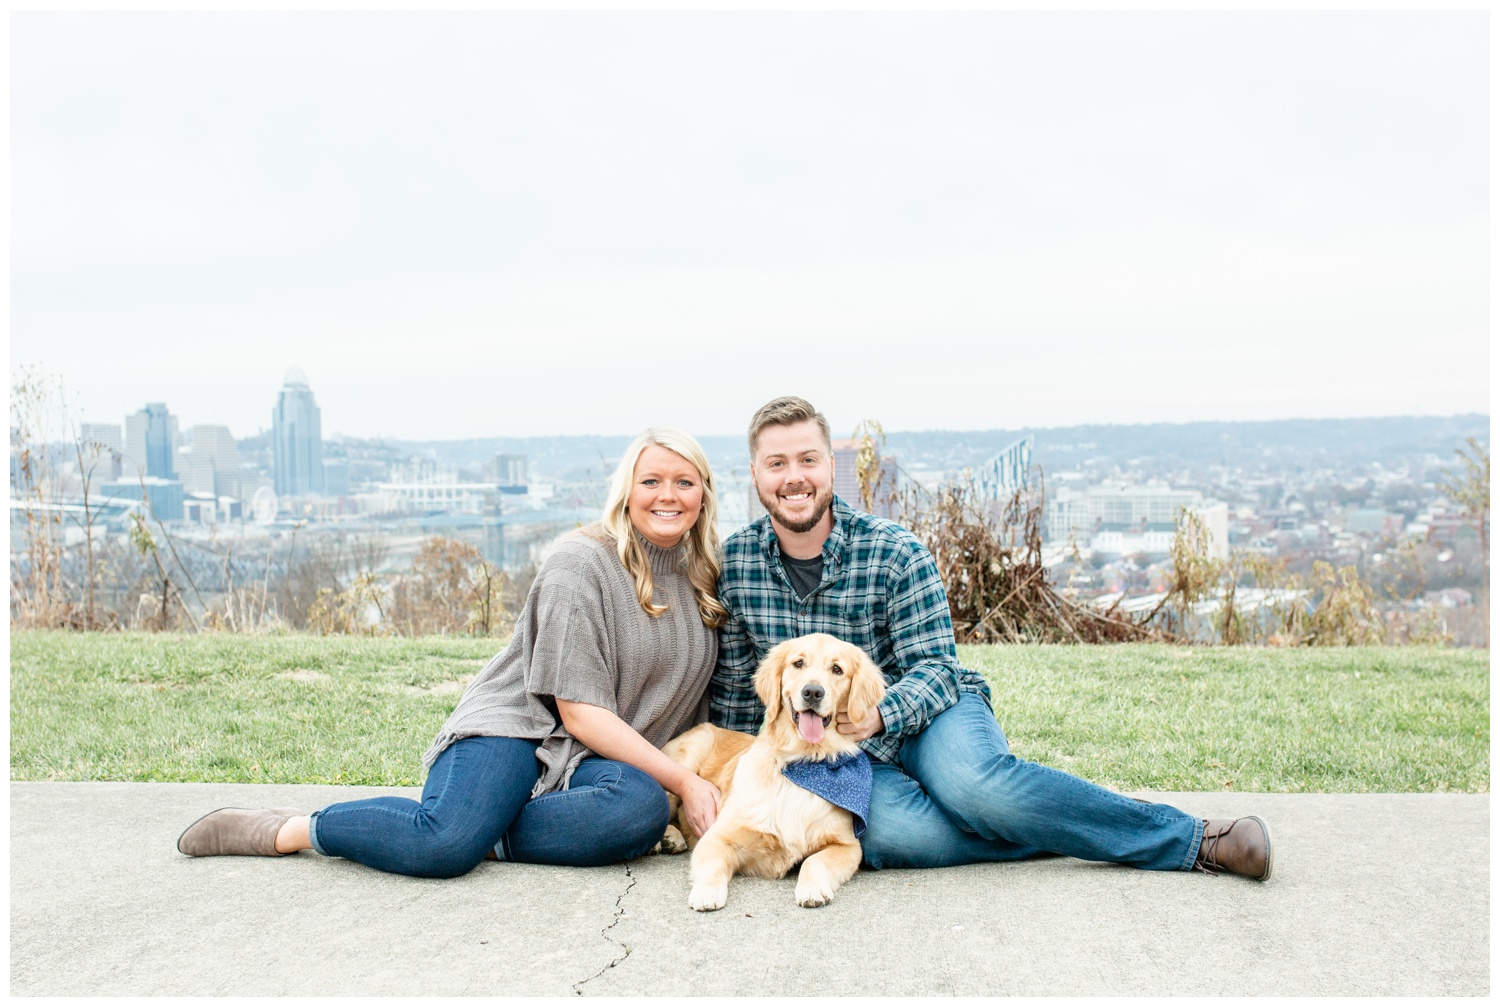 Devou Park Wedding - Devou Park Overlook - Cincinnati Engagement Session with Dog